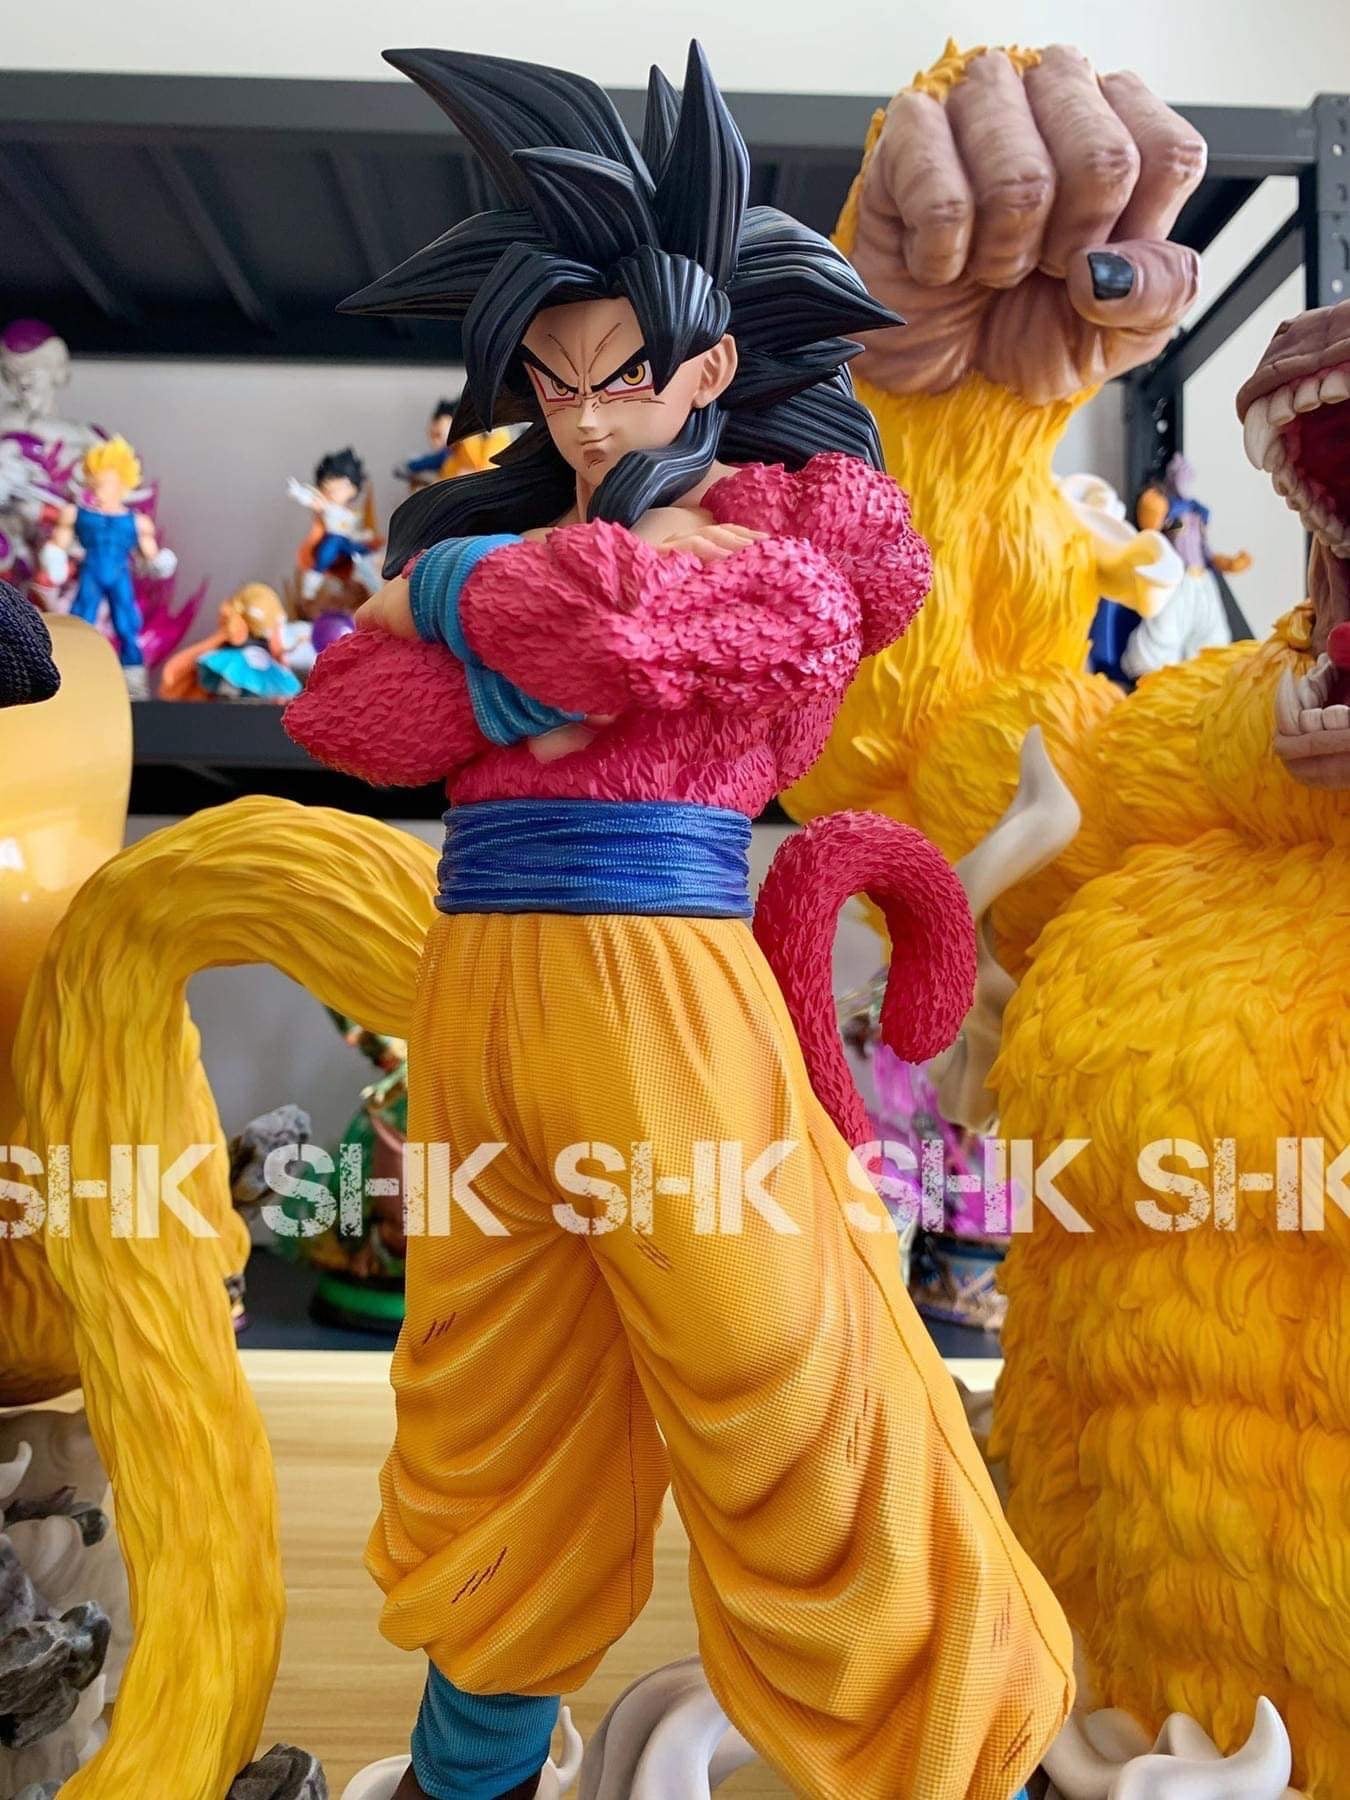 SHK - Ozaru SSJ4 Goku – StatueCorp